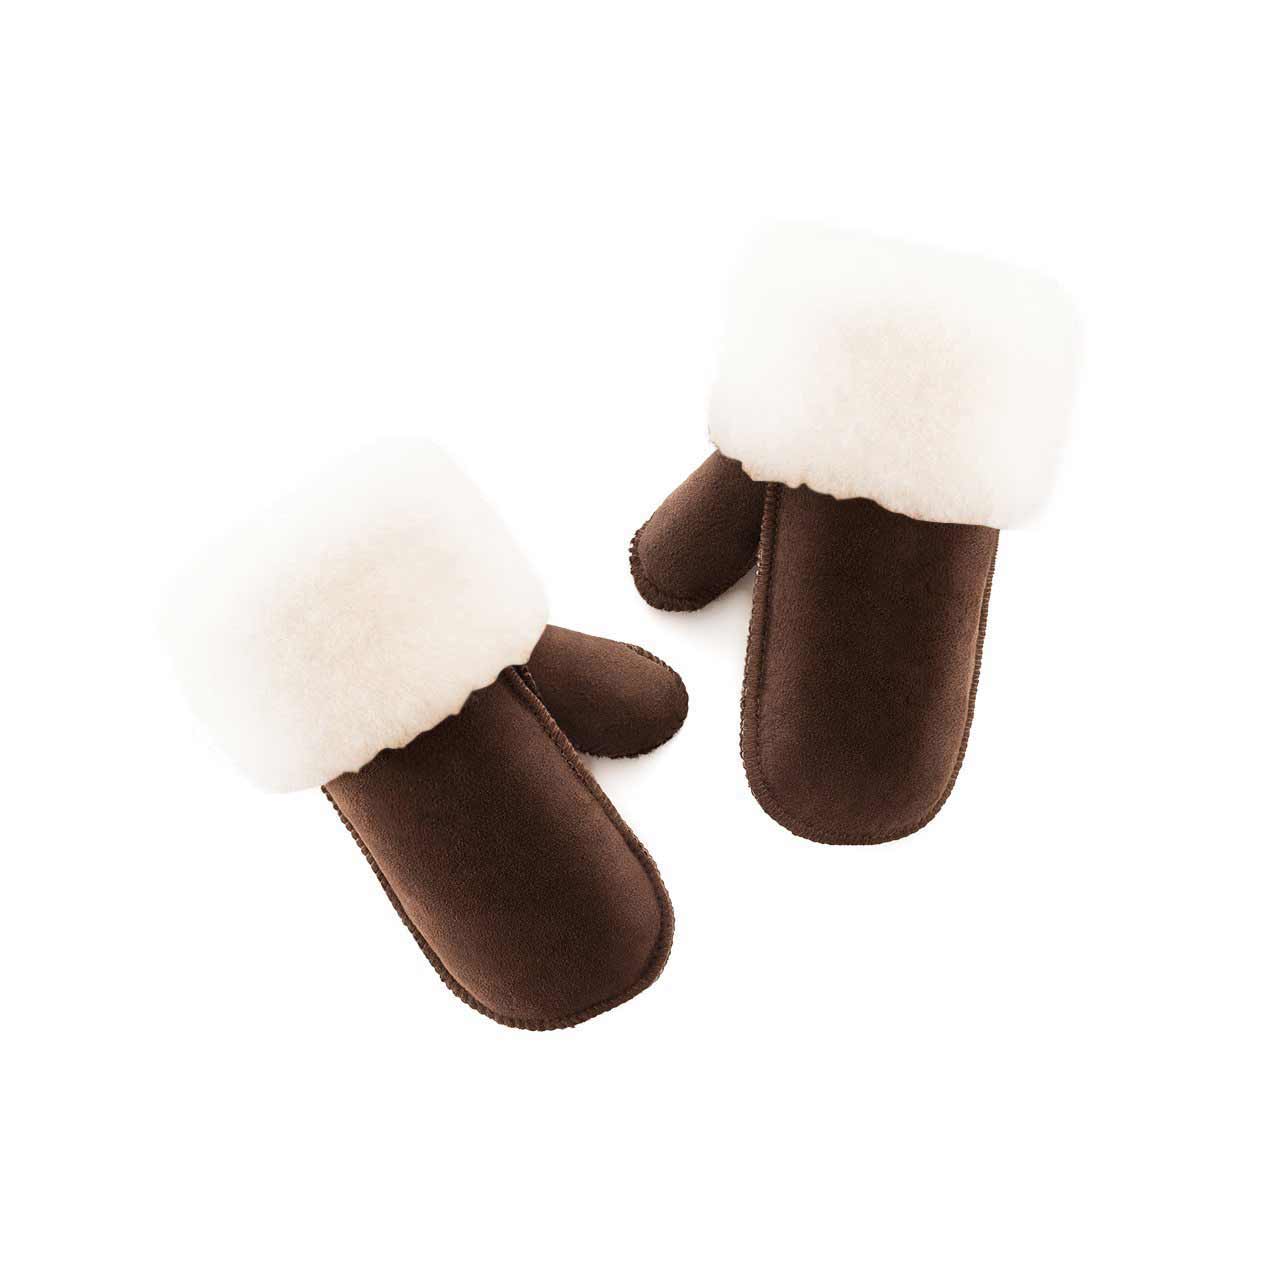 Mittens - Chocolate - Sheepskins Downunder